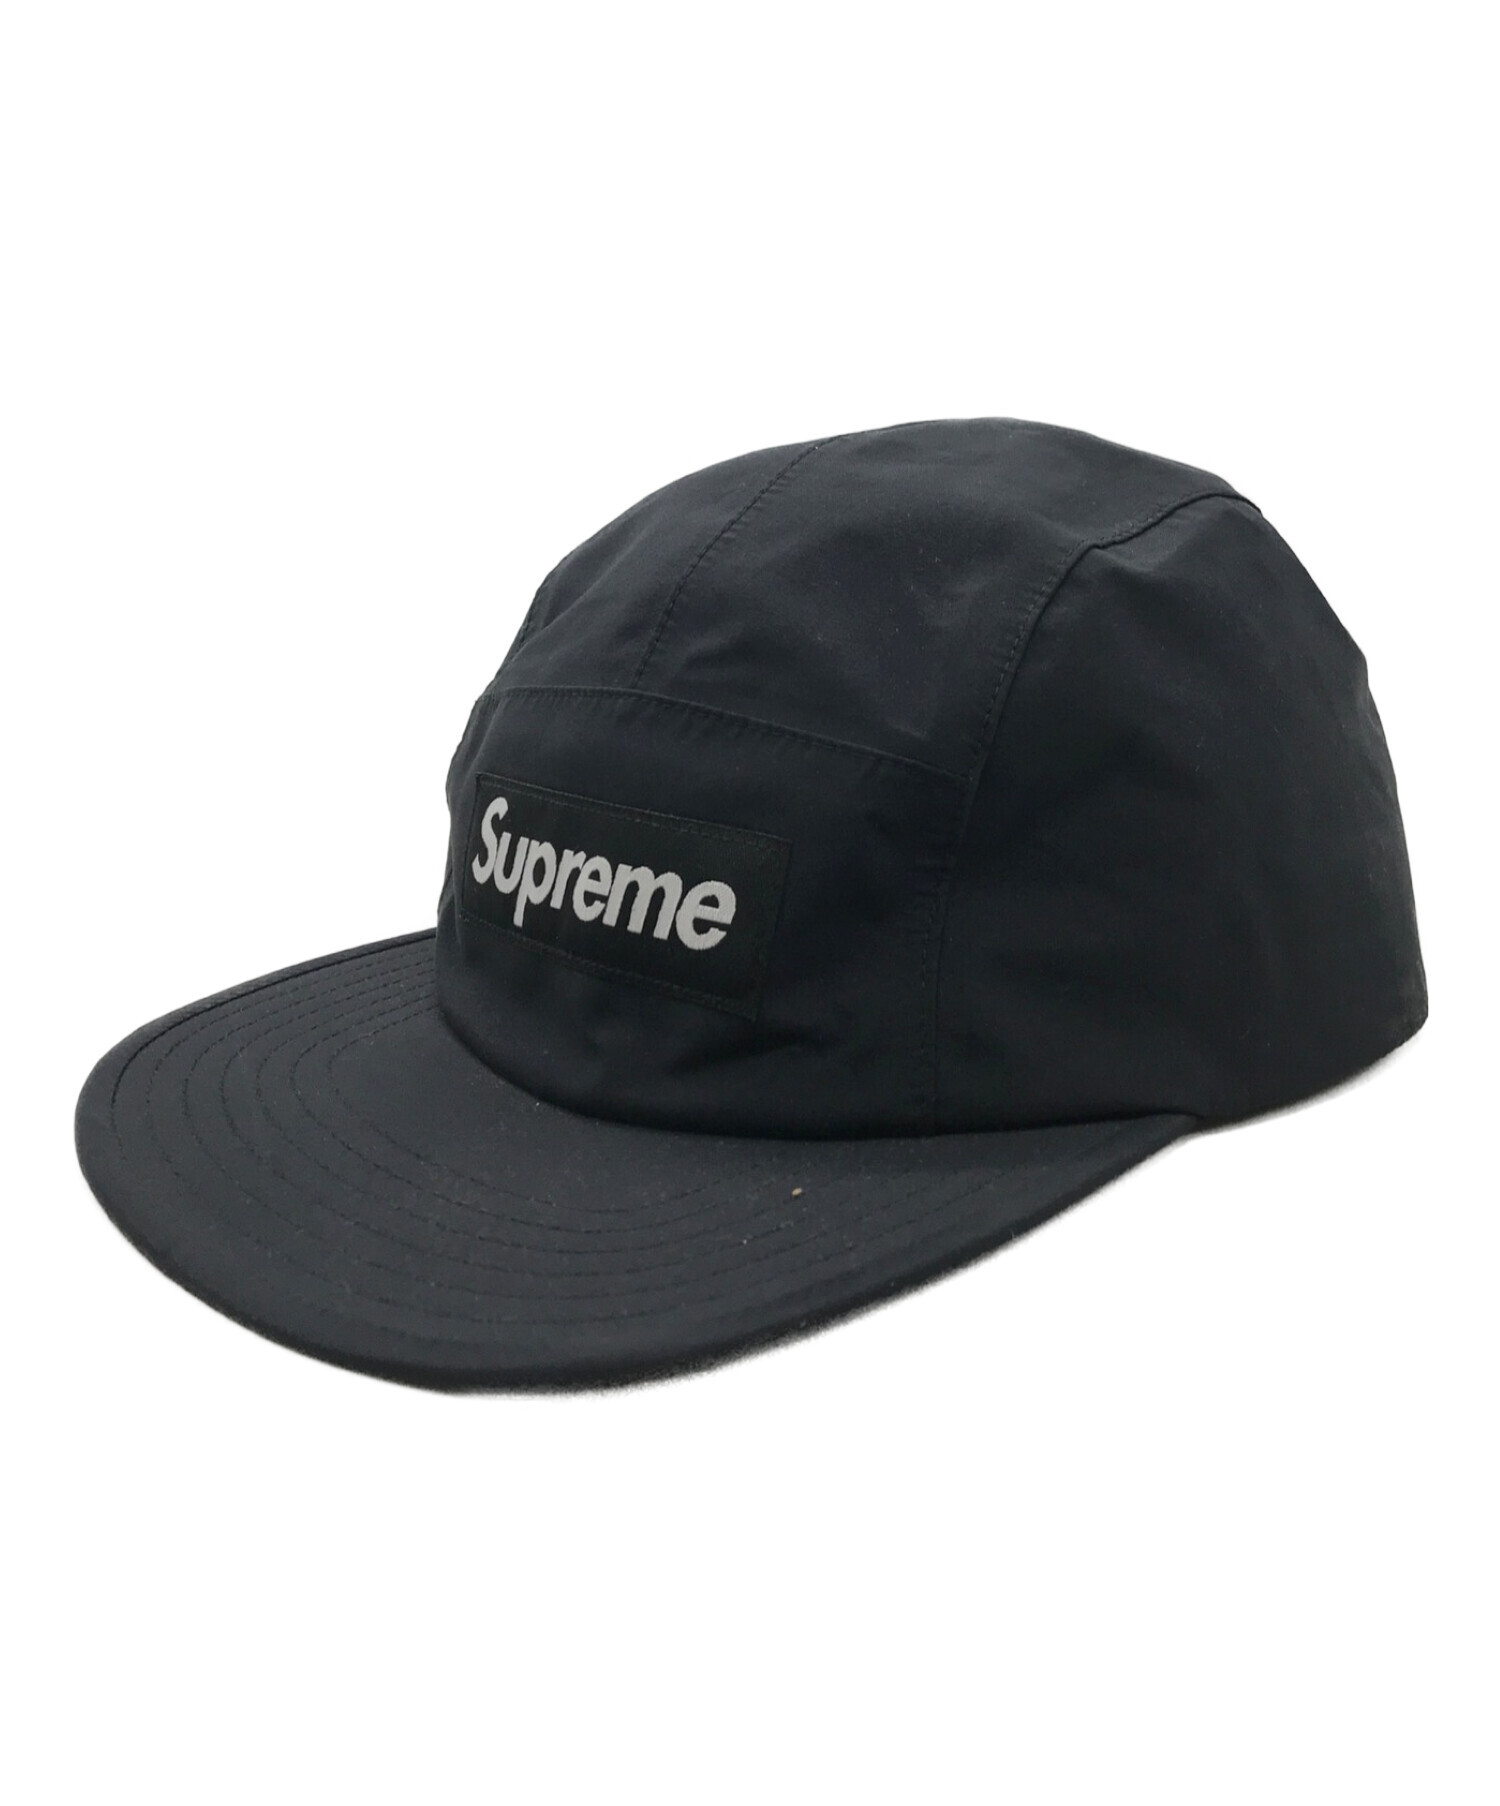 Supreme GORE-TEX cap